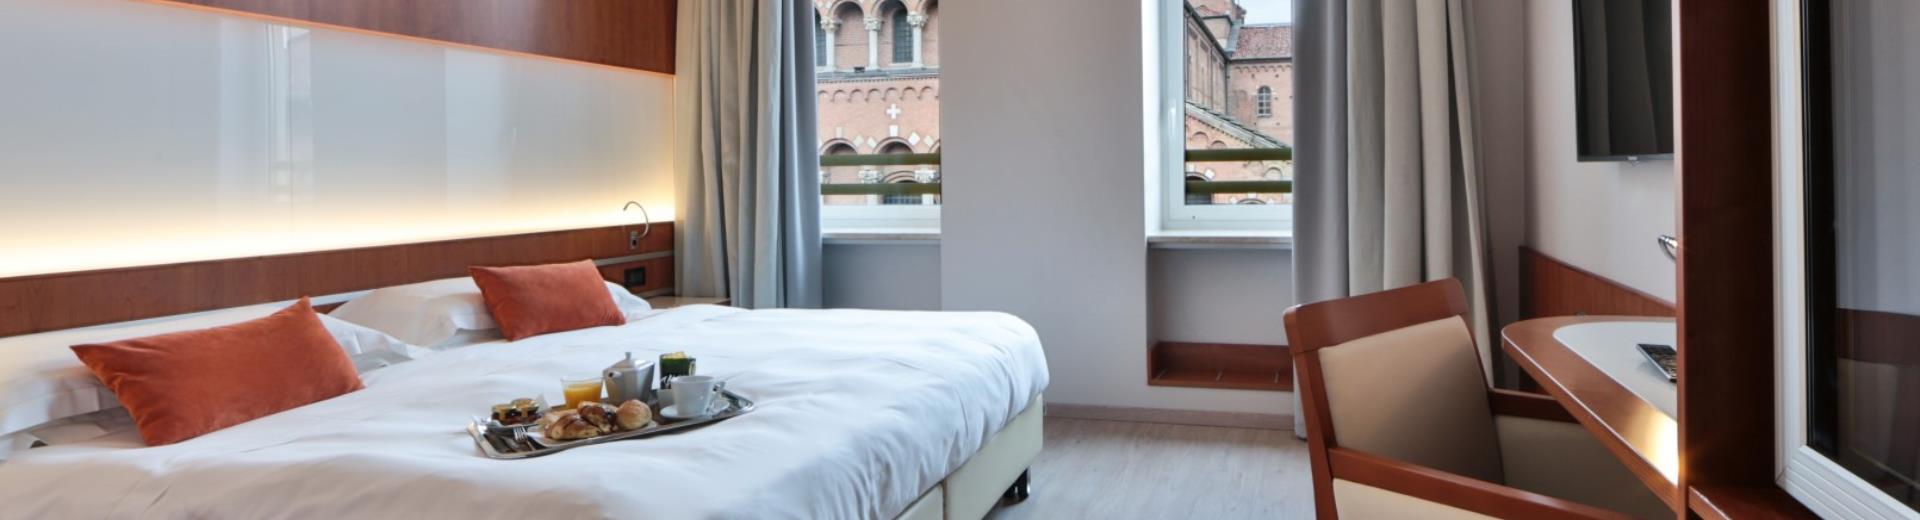 Double chambre twin-hôtel Astoria Milan